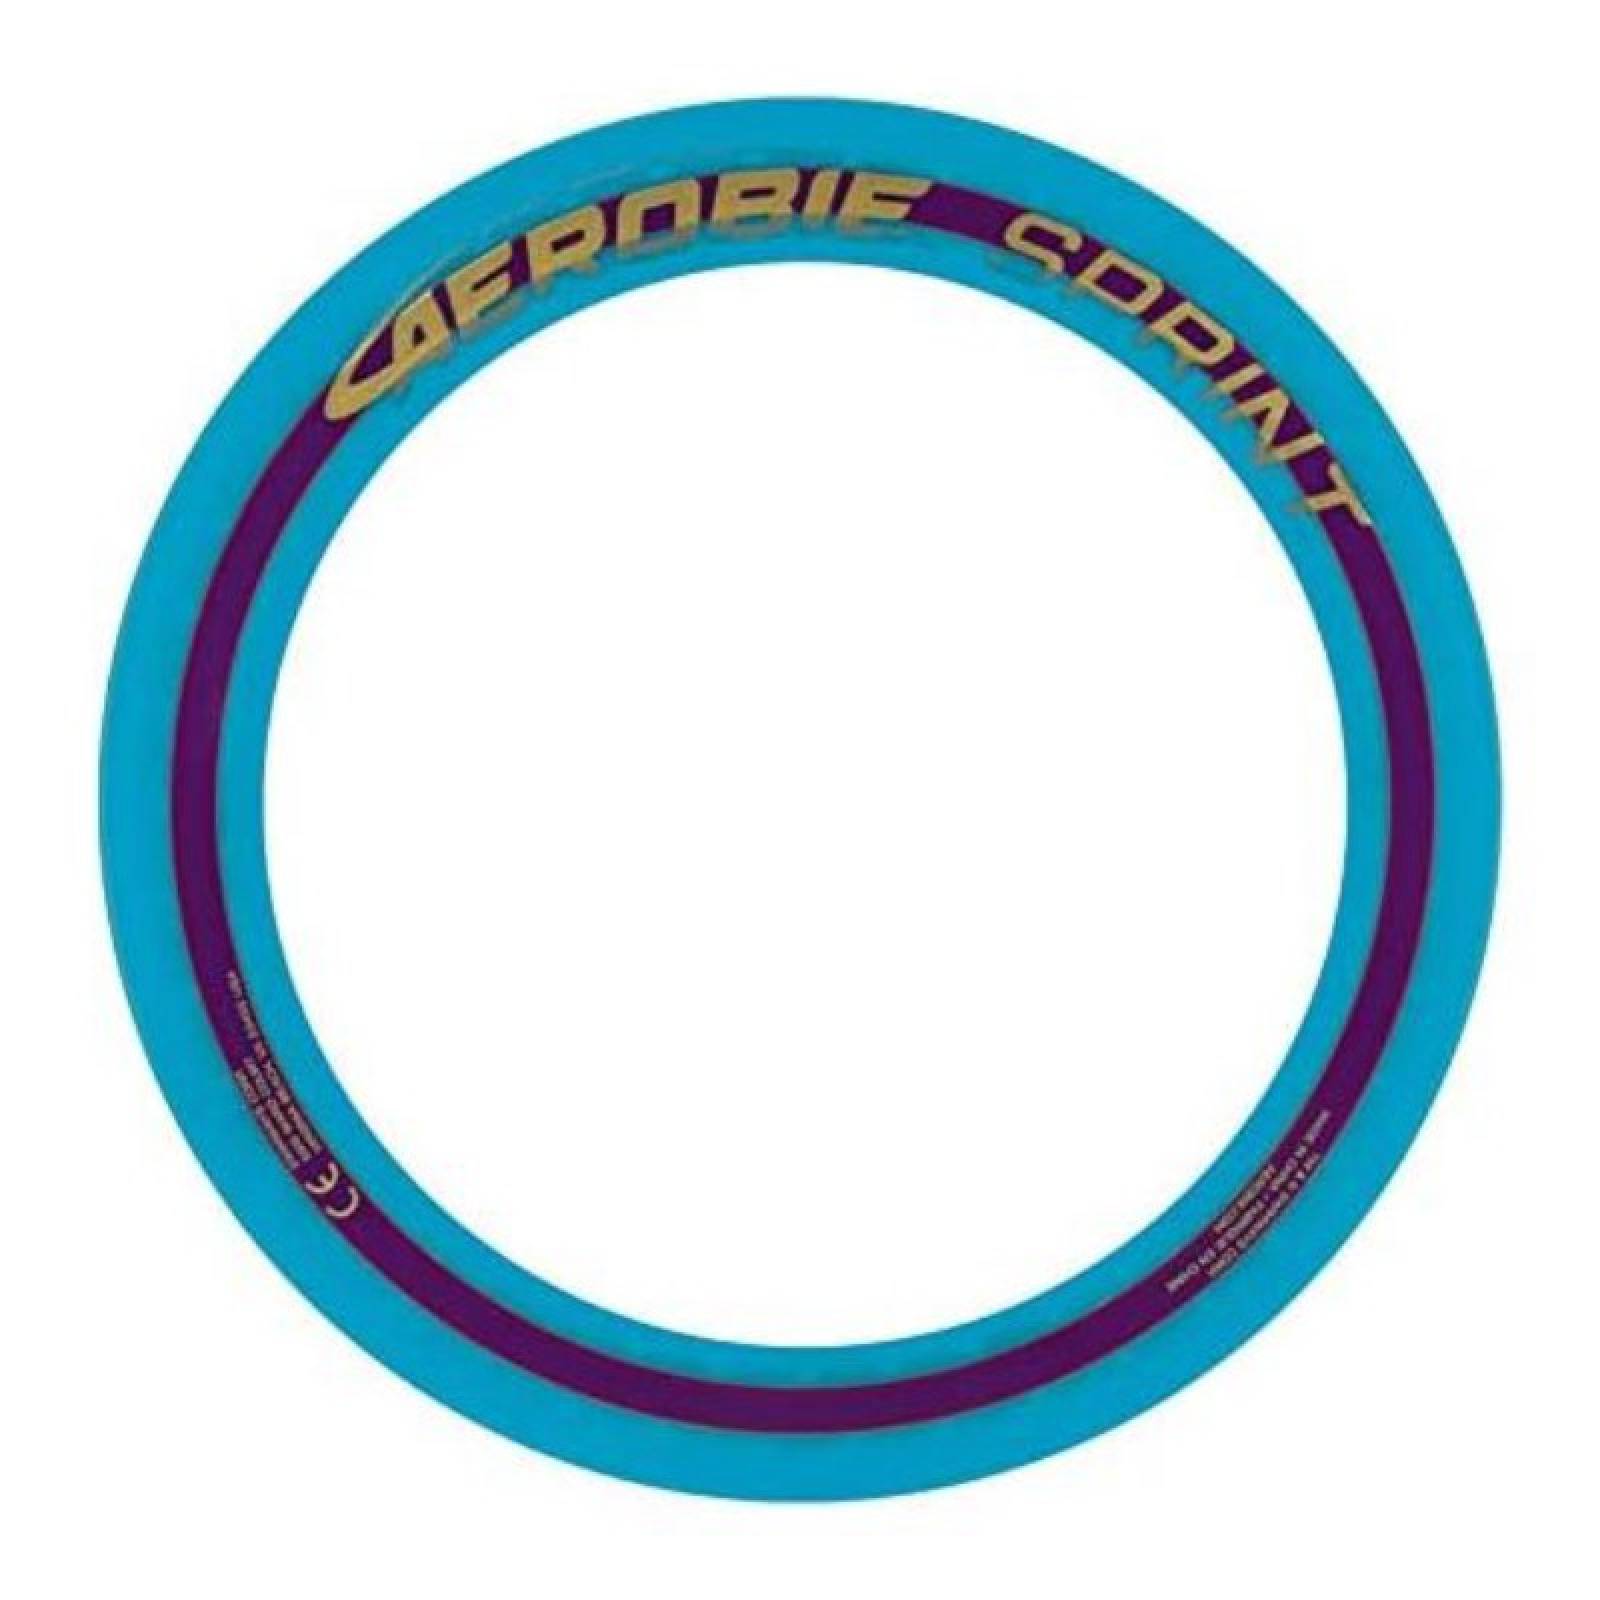 Aerobie Sprint, 10' Flying Ring Frisbee.